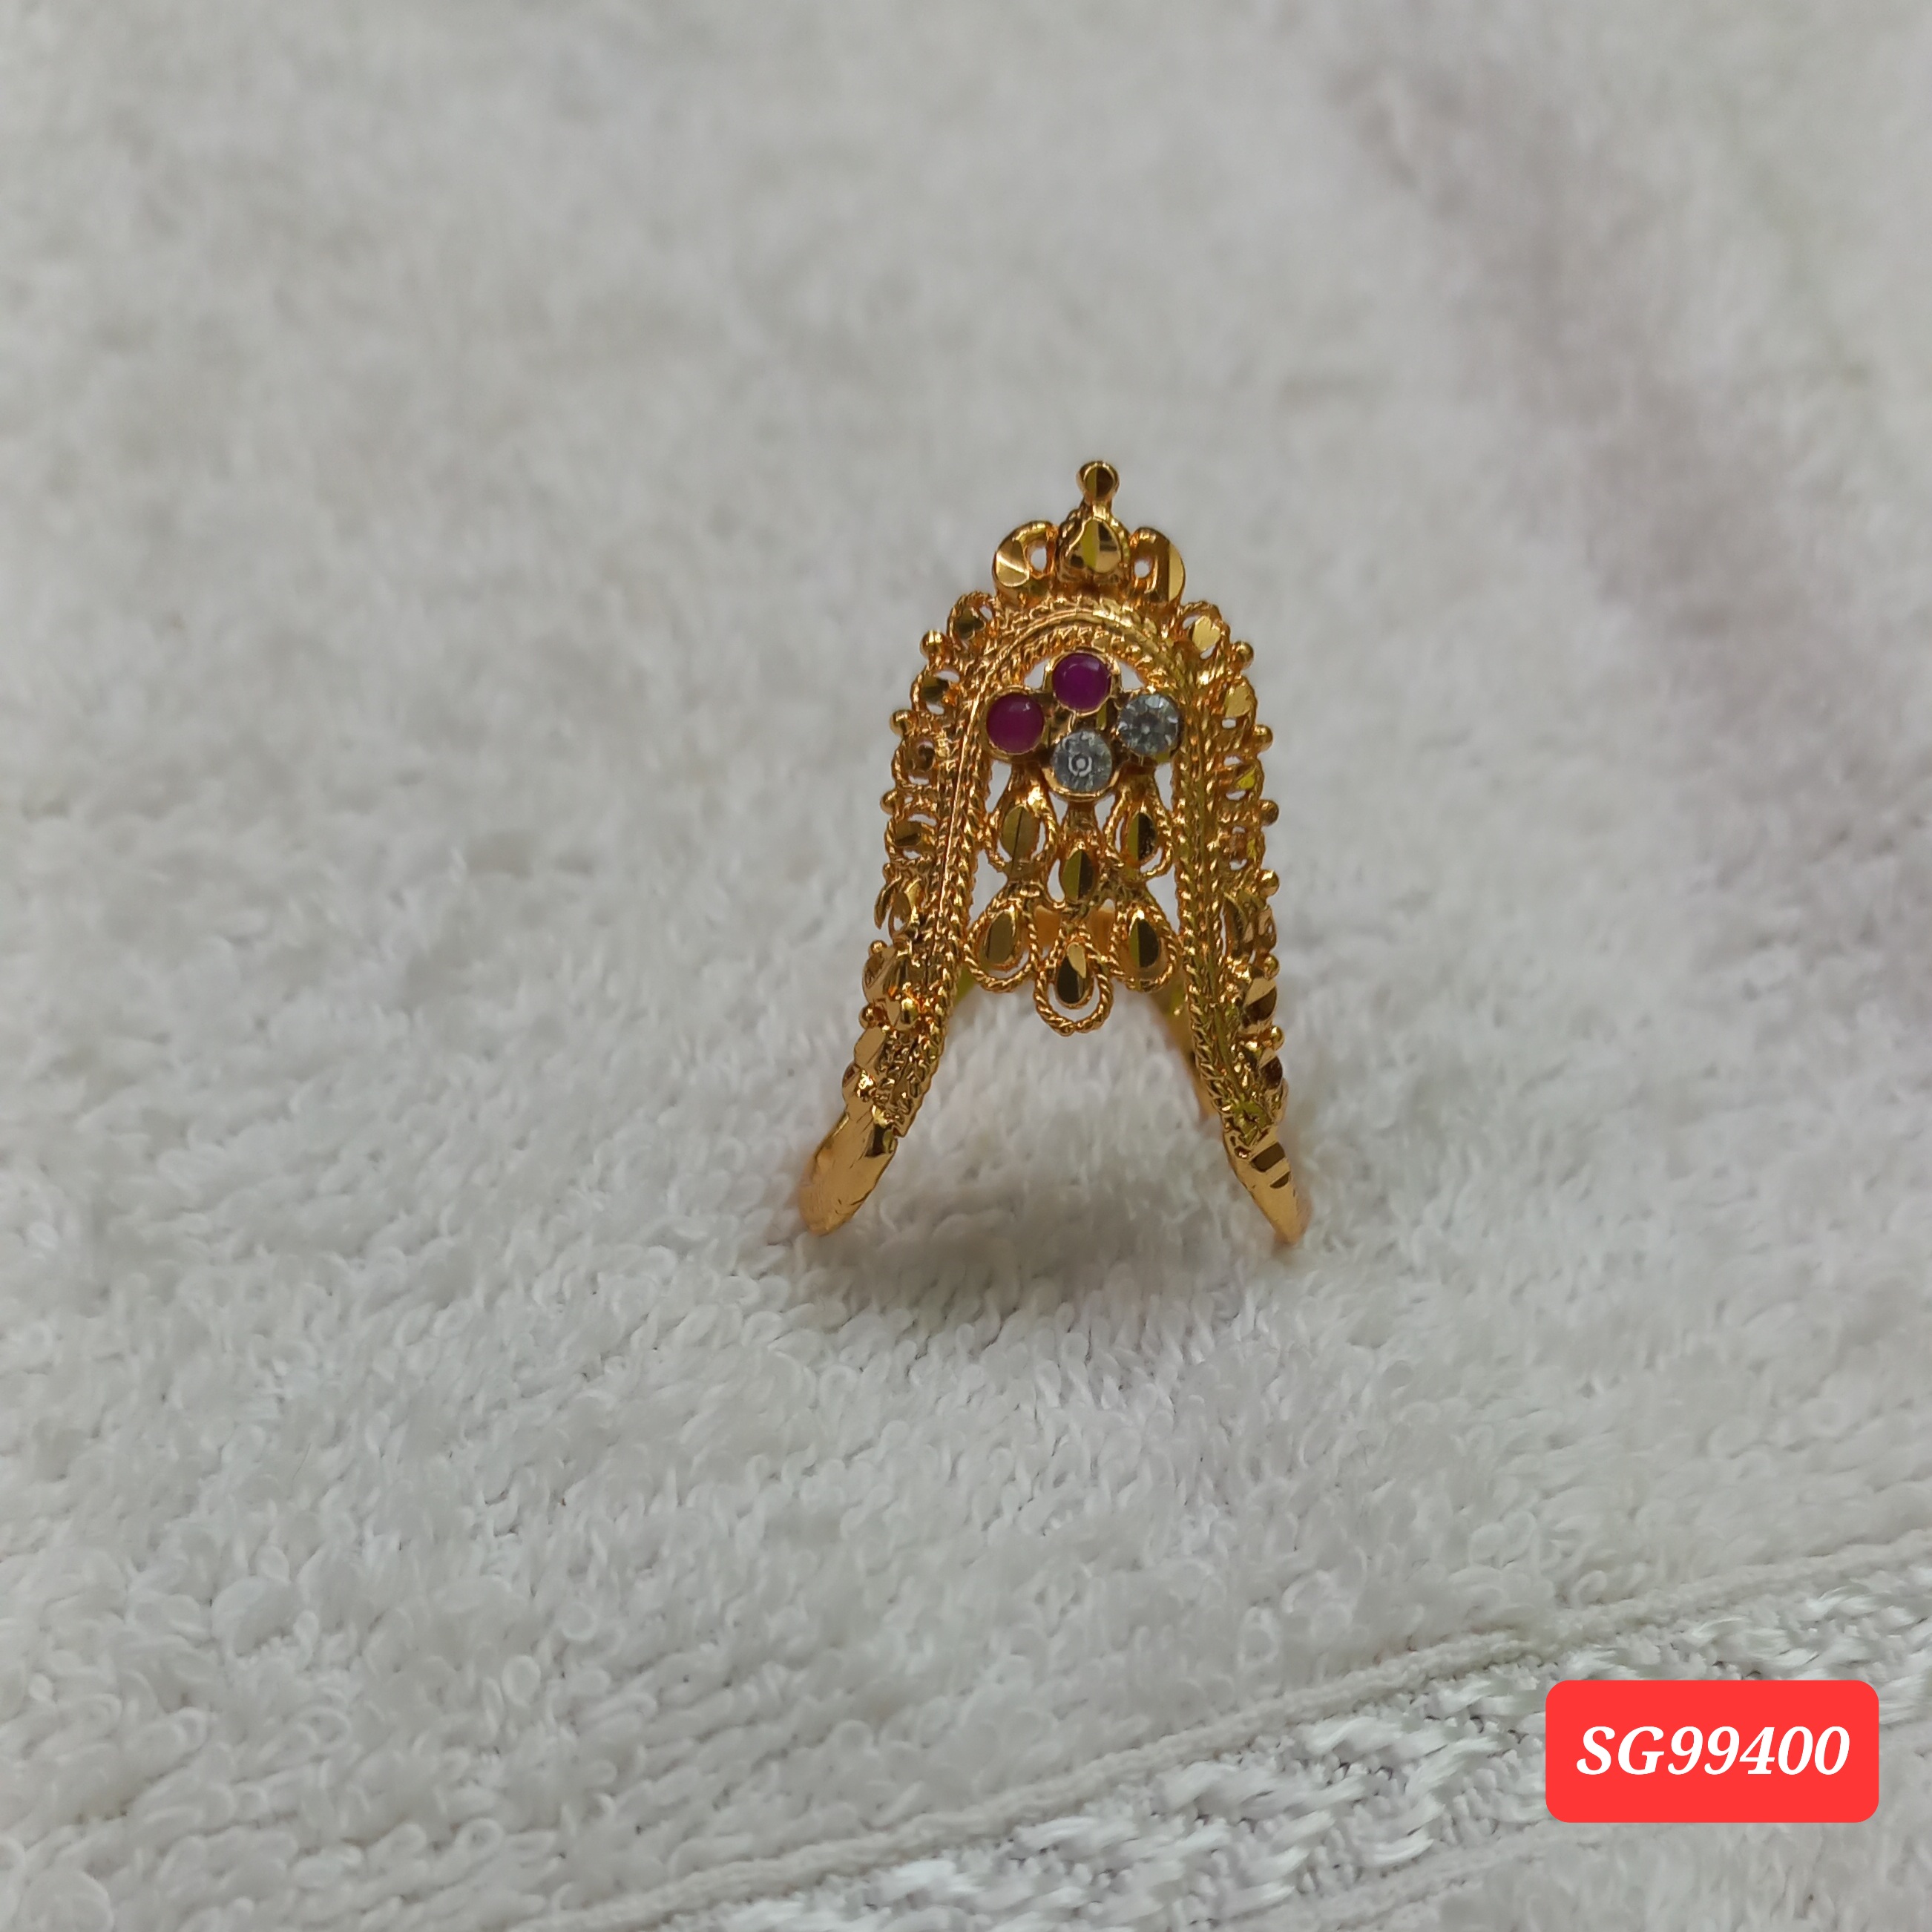 latest gold vanki finger rings models// అంజు ఉంగరం లేటెస్ట్ మోడల్స్/with  weight and price 👍 - YouTube